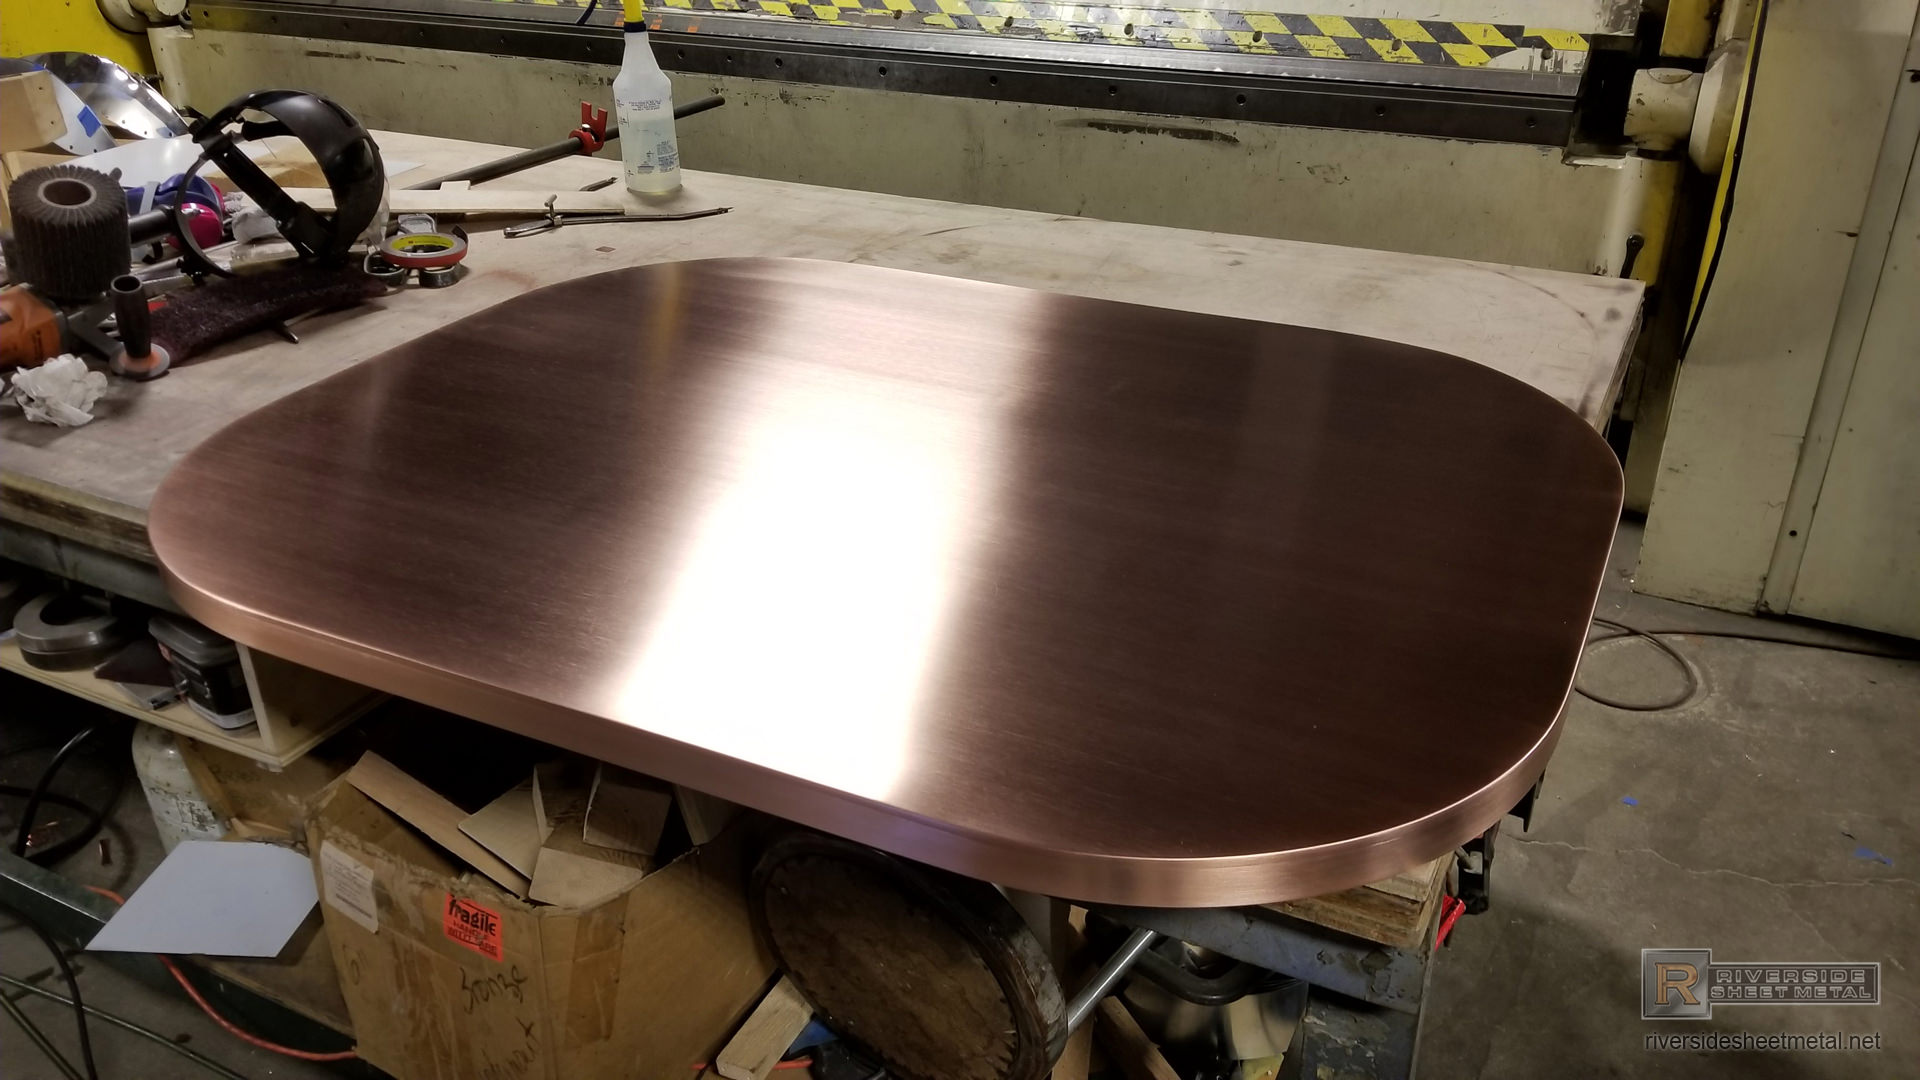 https://www.riversidesheetmetal.net/counter-tops/copper/oval-brushed-copper-table-top-2_1080.jpg